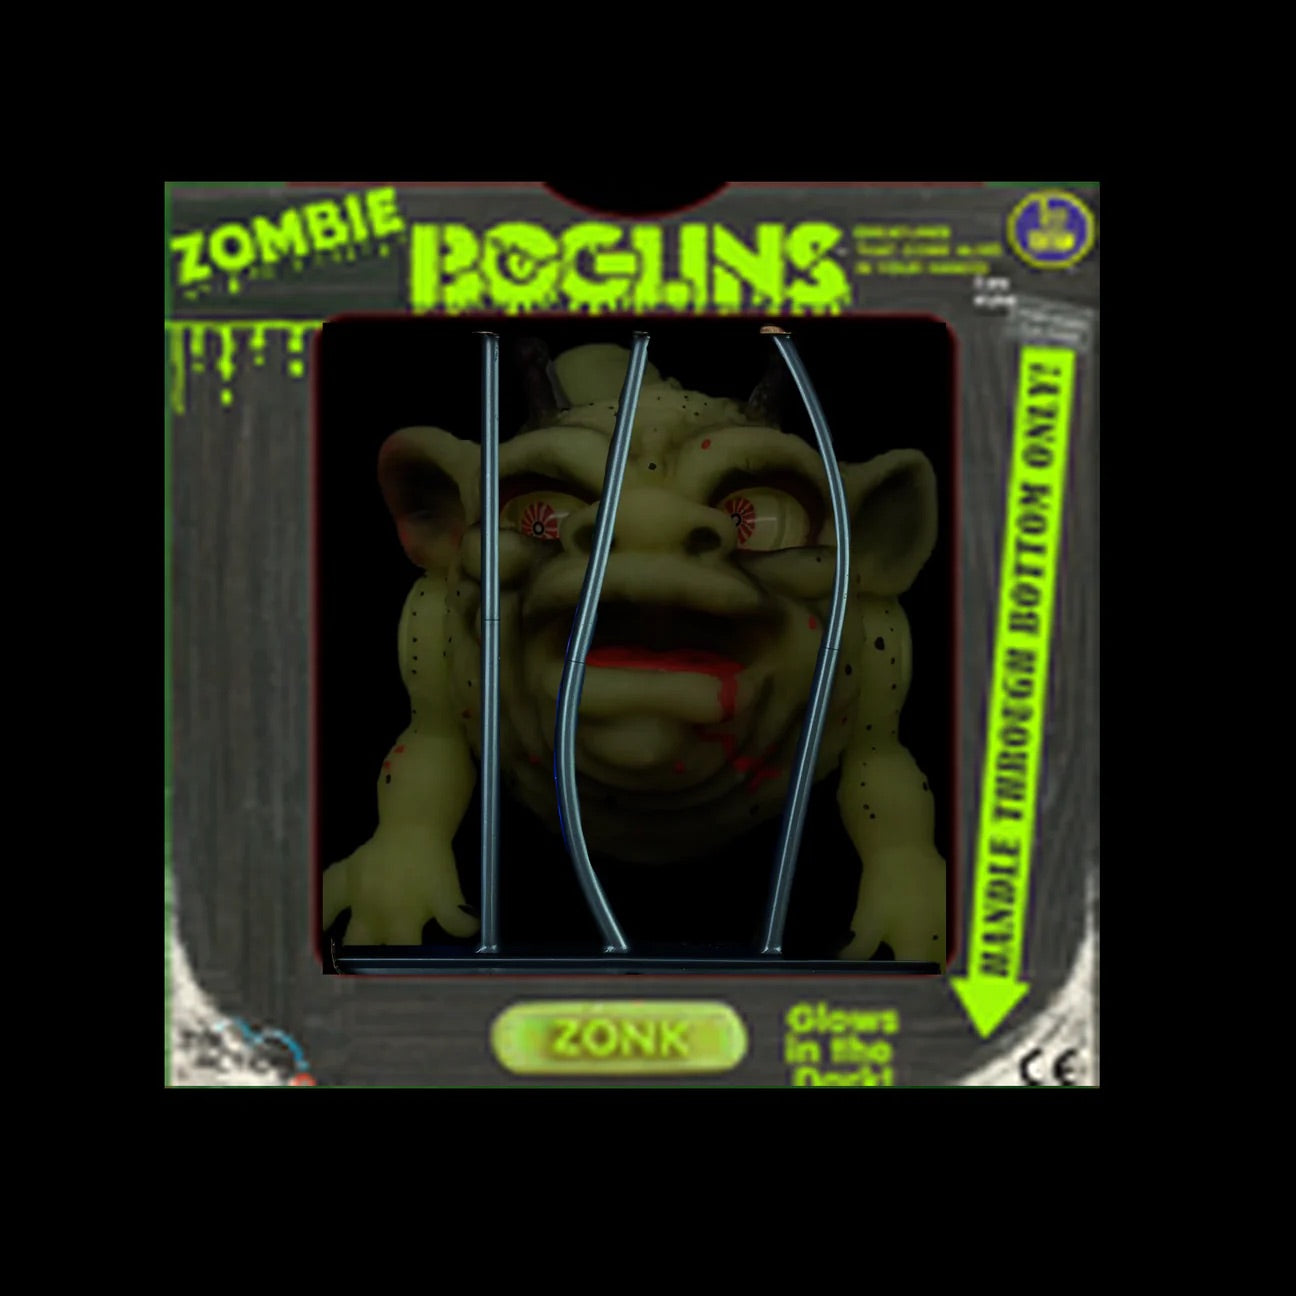 Boglins Zombie Zonk in Cage